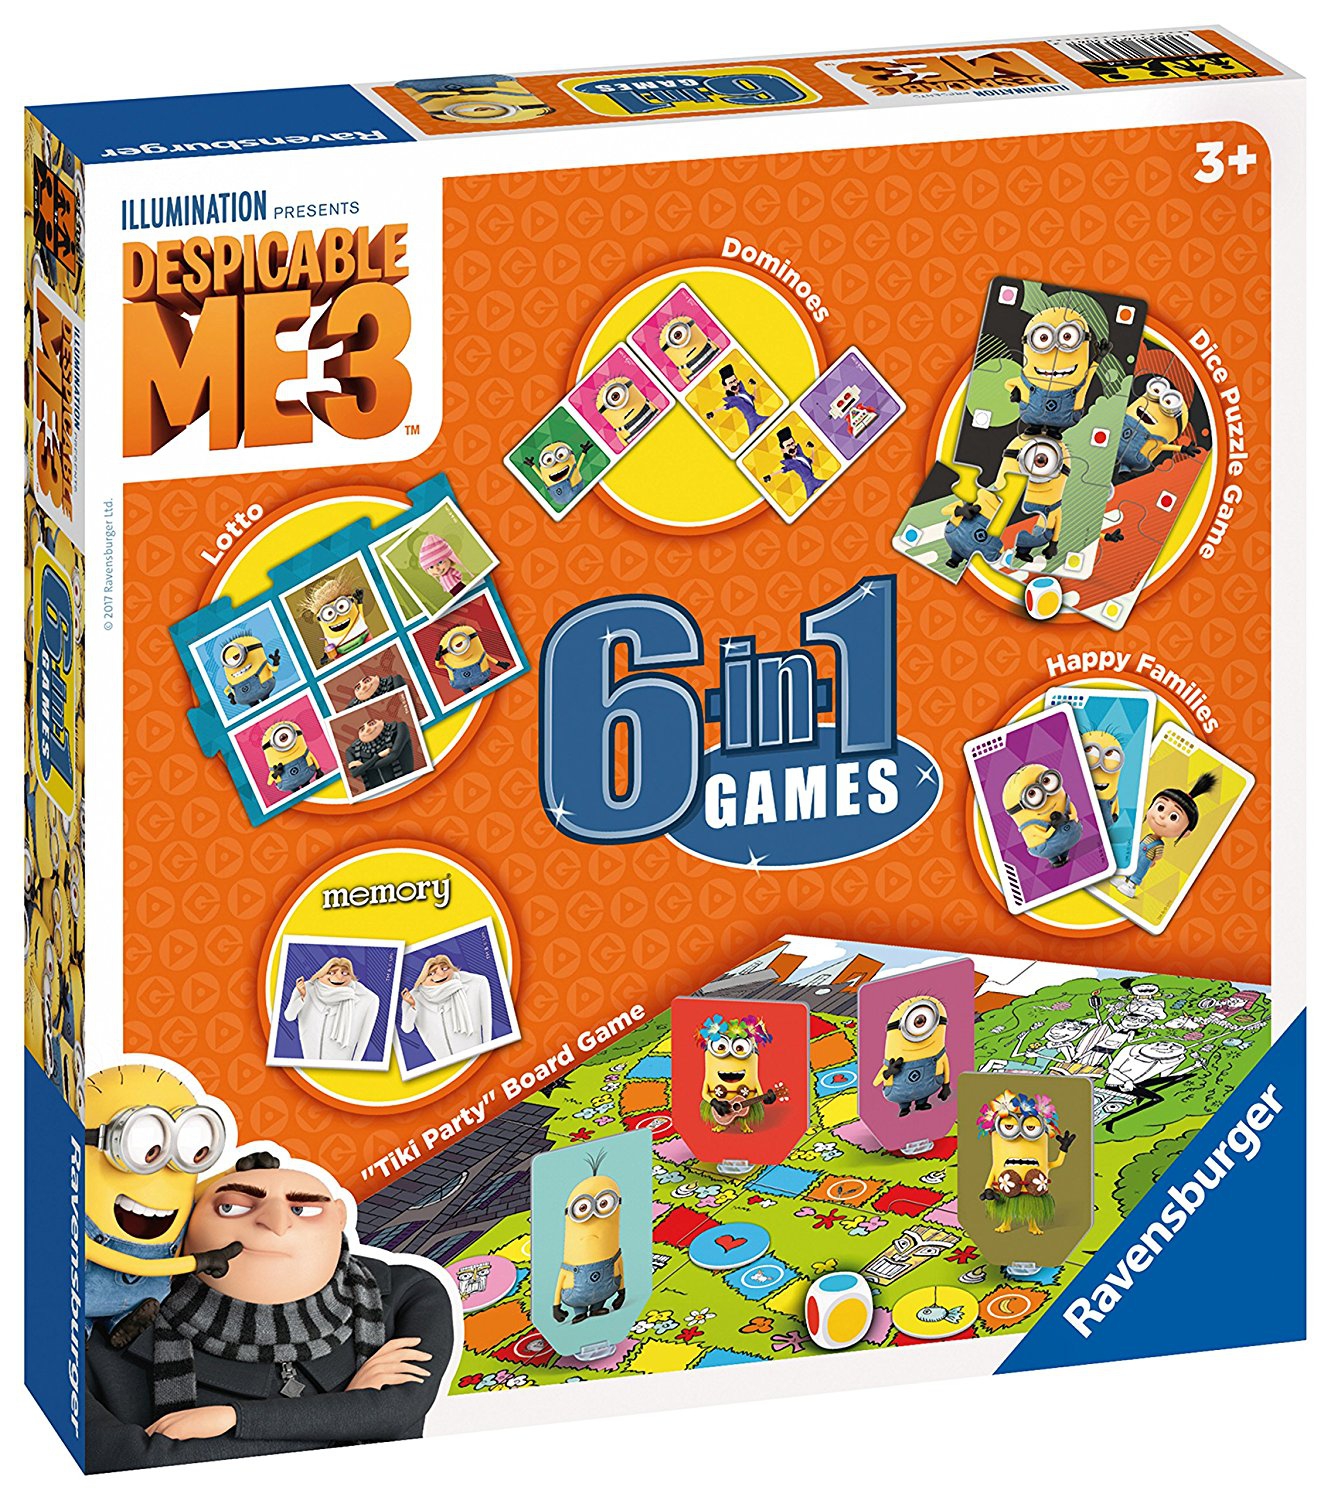 Despicable Me 3 'Minions' 6 In 1 Board Game